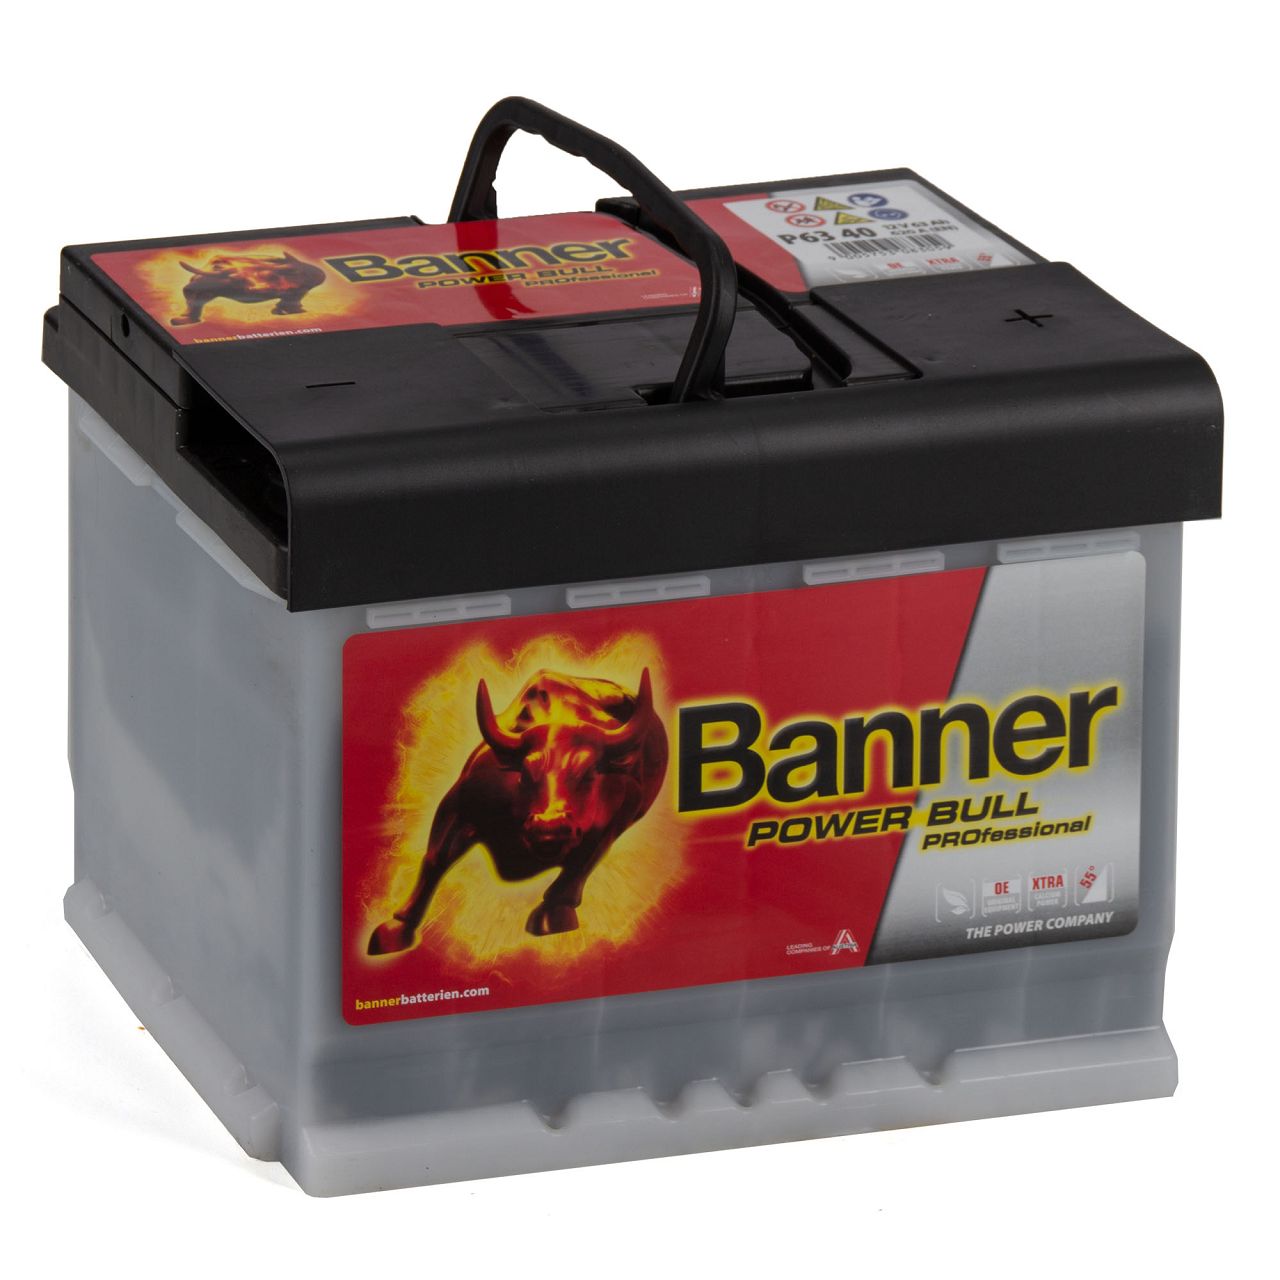 BANNER PROP6340 PRO P6340 Power Bull Professional Autobatterie Batterie 12V 63Ah